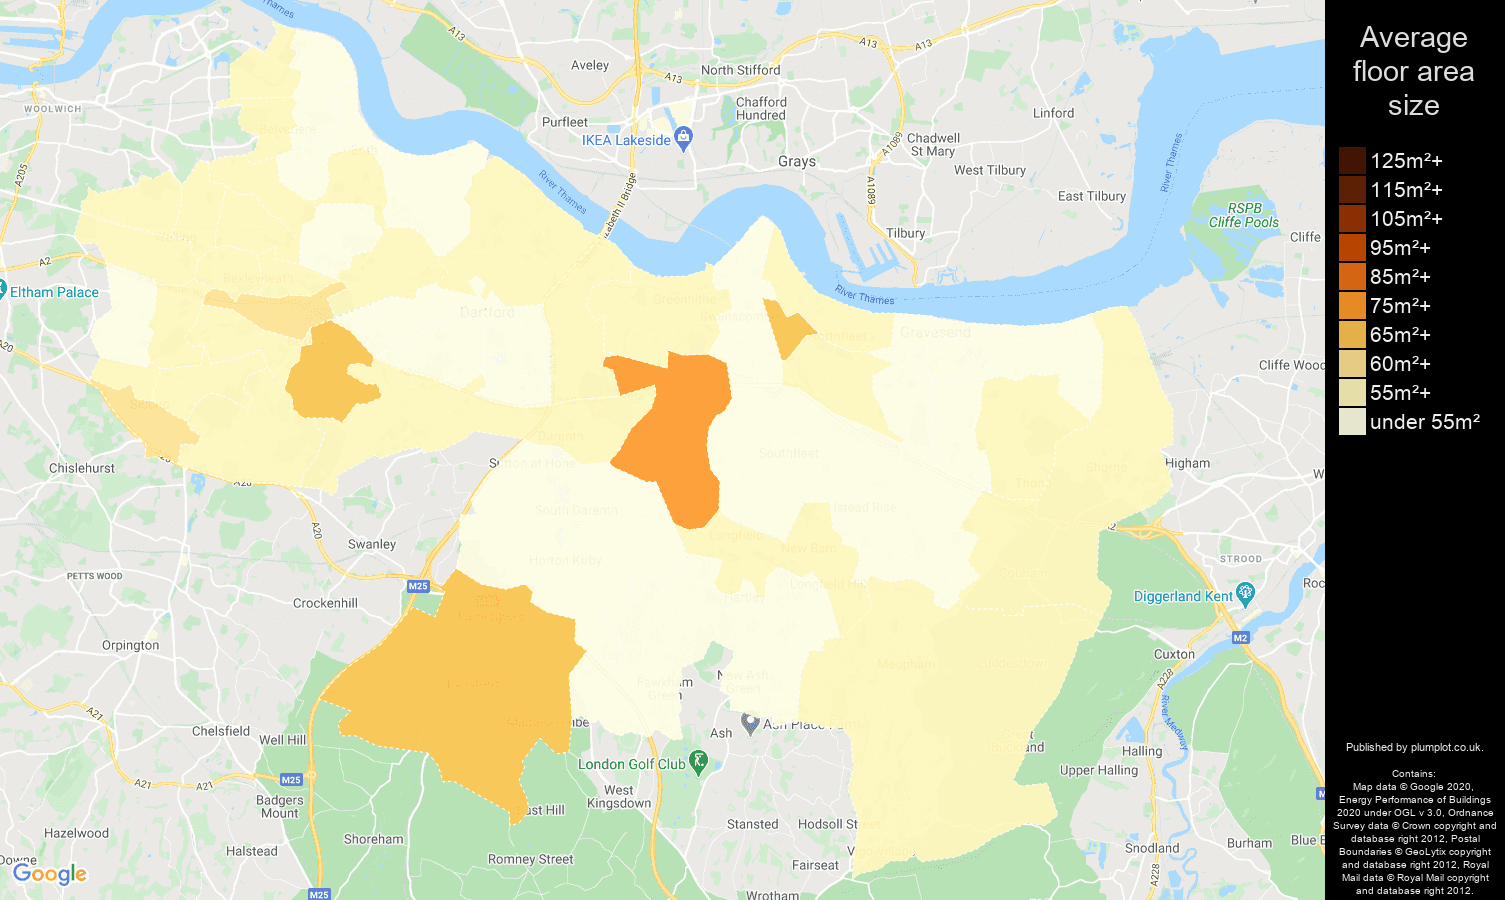 Dartford map of average floor area size of flats